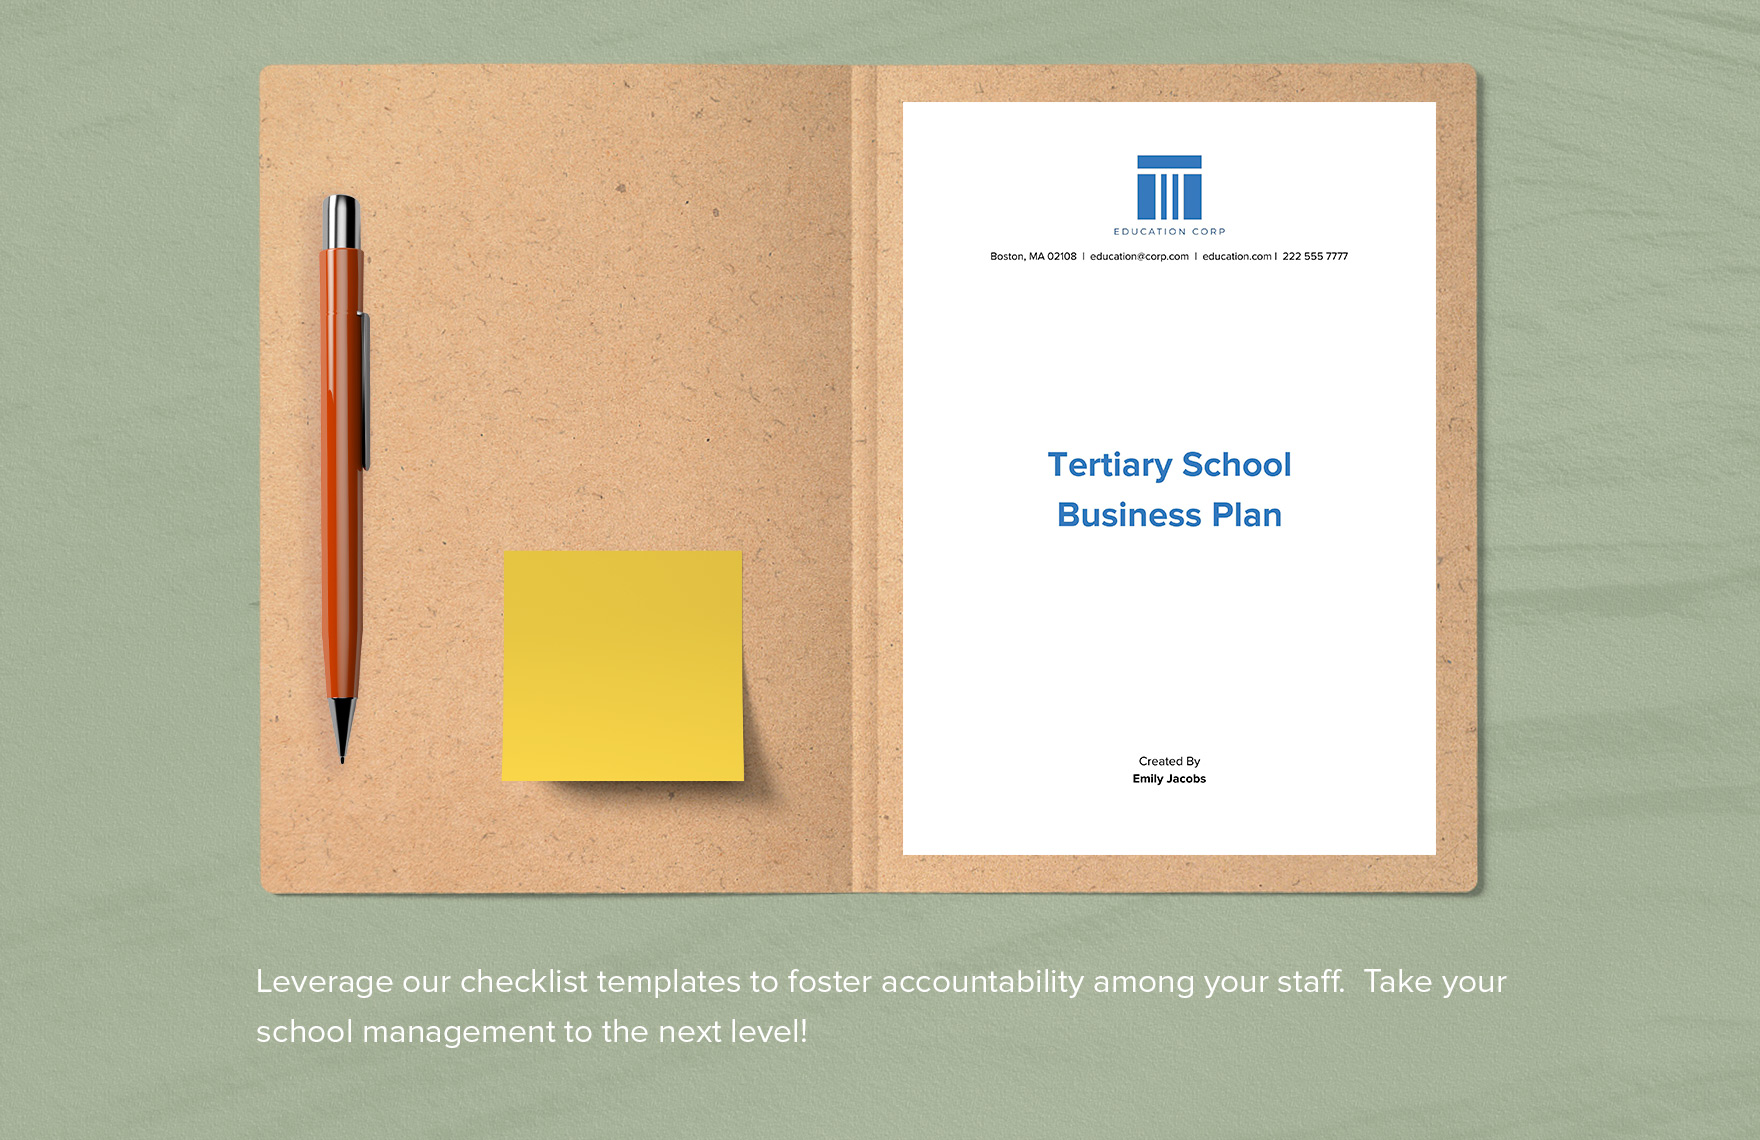 Tertiary School Business Plan Template